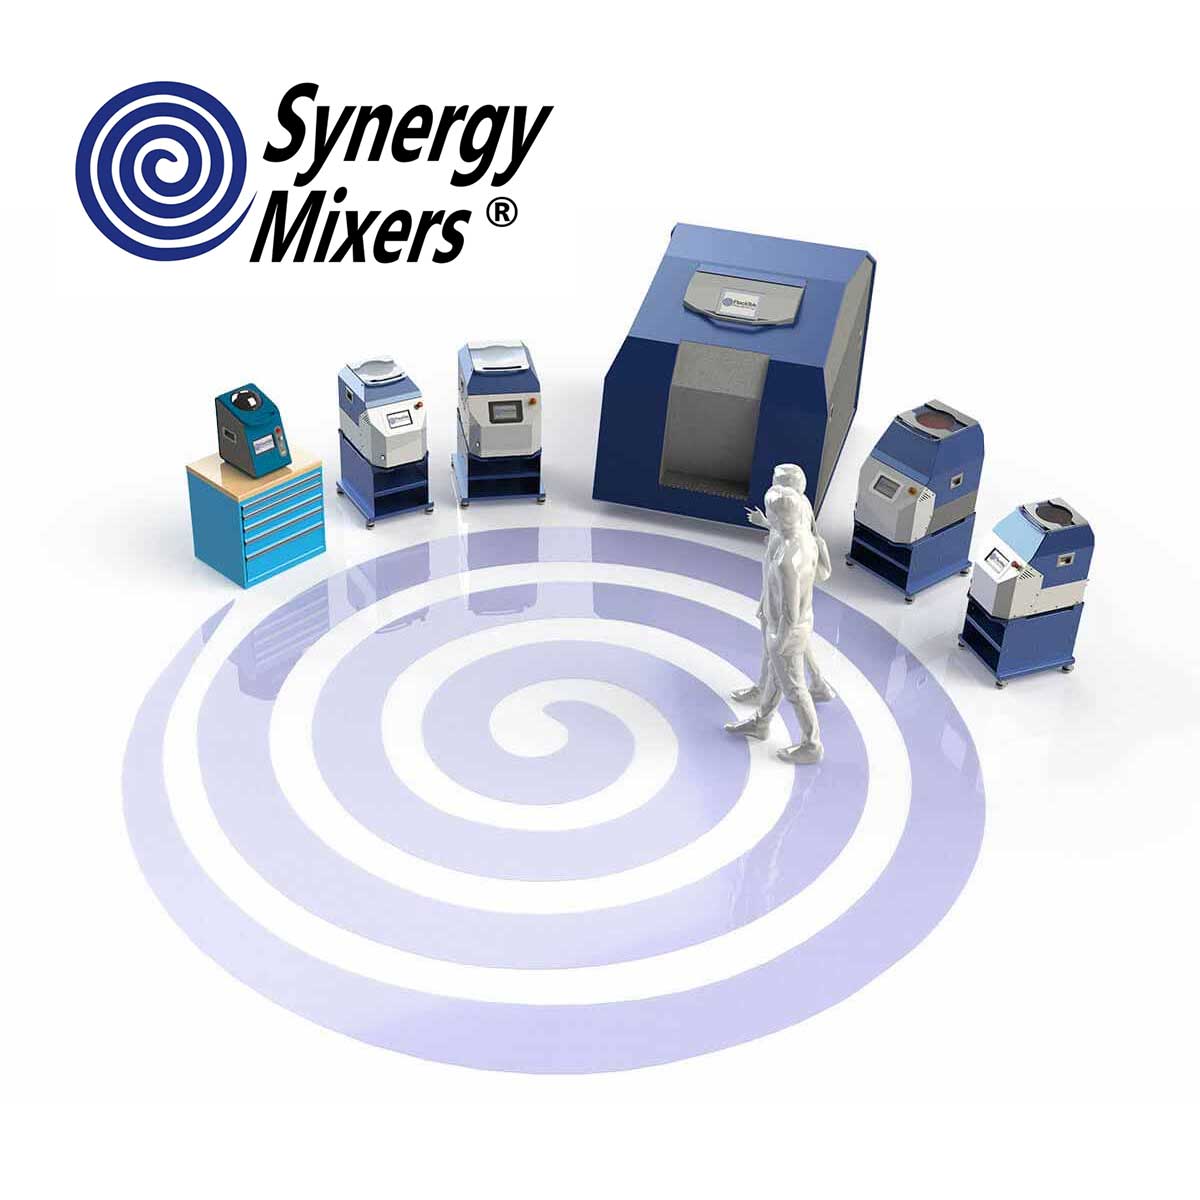 SynergyMixers Bladeless Mixing Machines